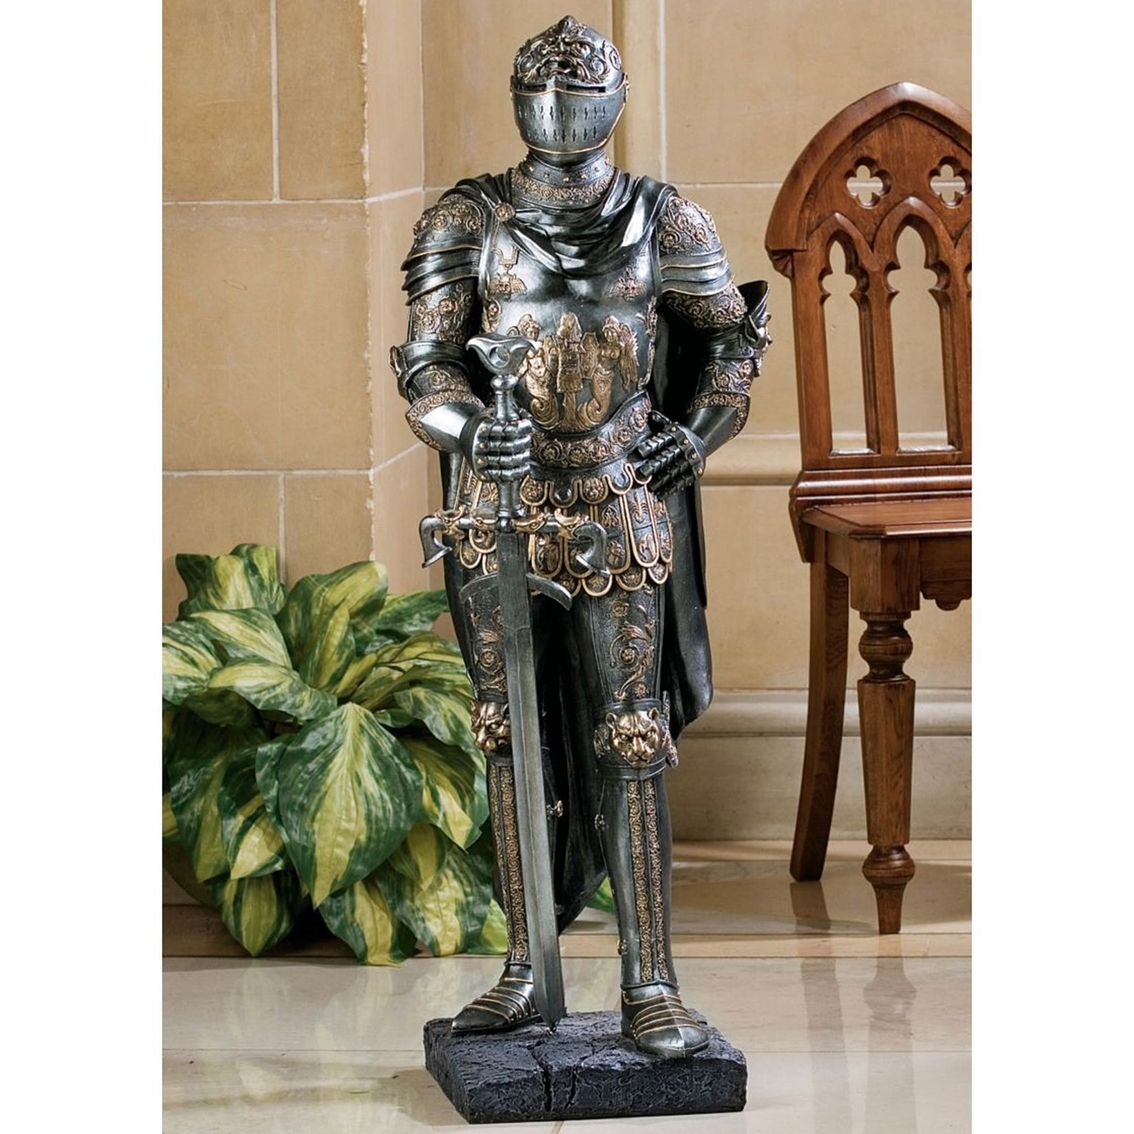 Design Toscano The King's Guard Sculptural Half Scale Knight Replica - Image 3 of 3